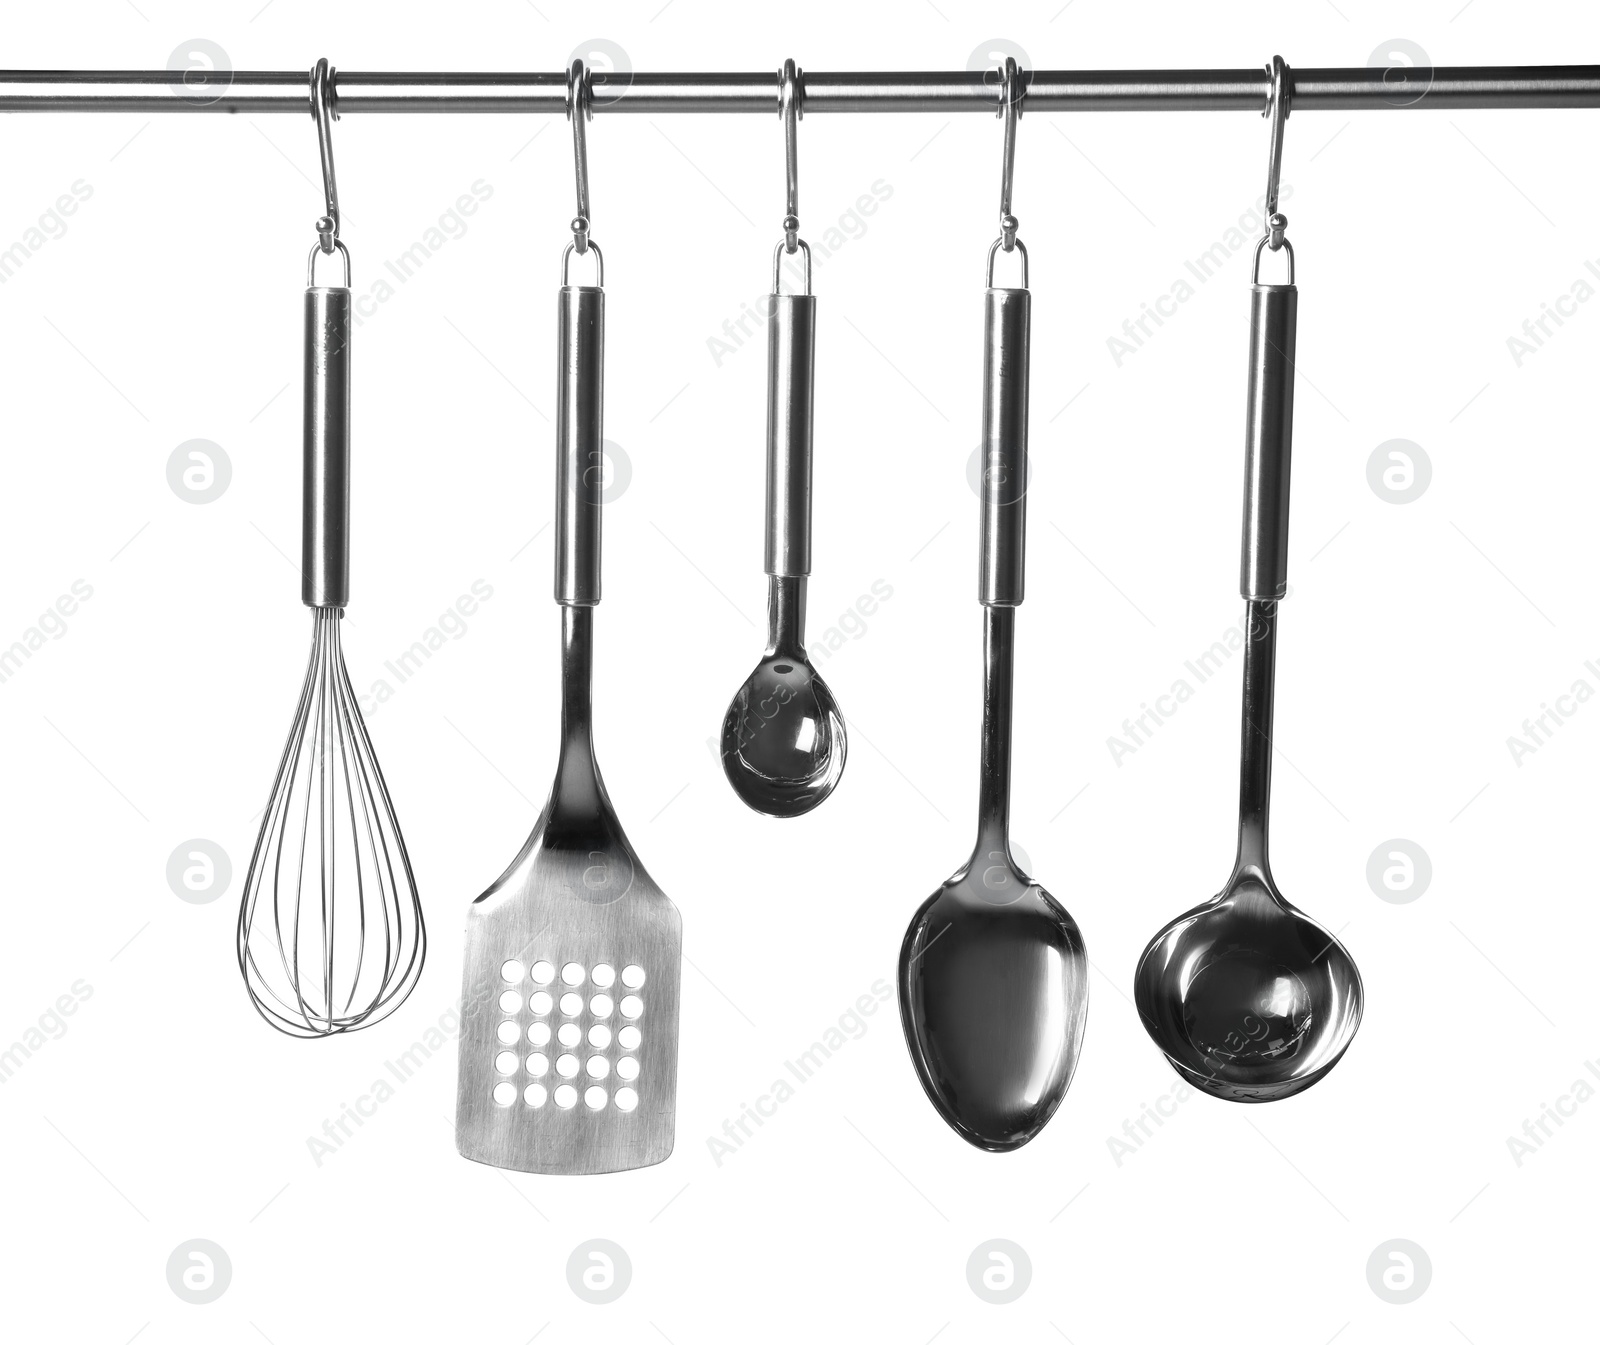 Photo of Set of kitchen utensils hanging against white background